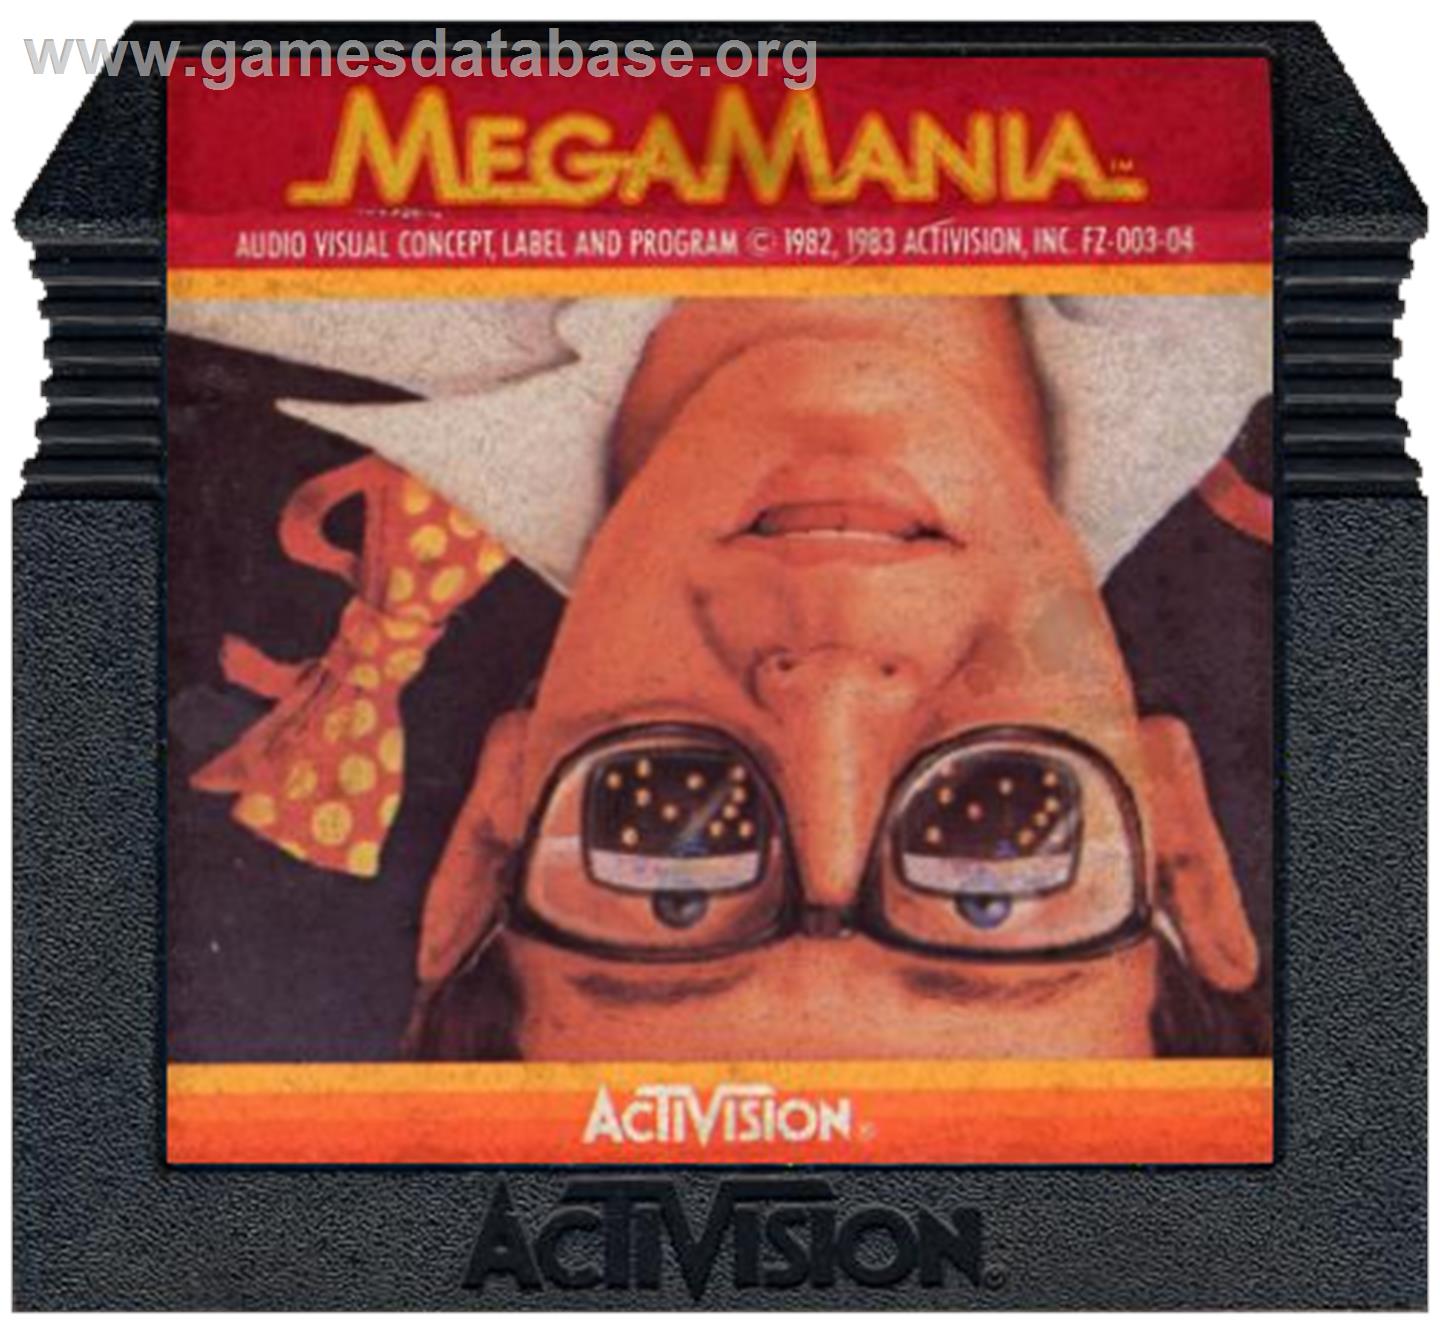 Megamania - Atari 5200 - Artwork - Cartridge